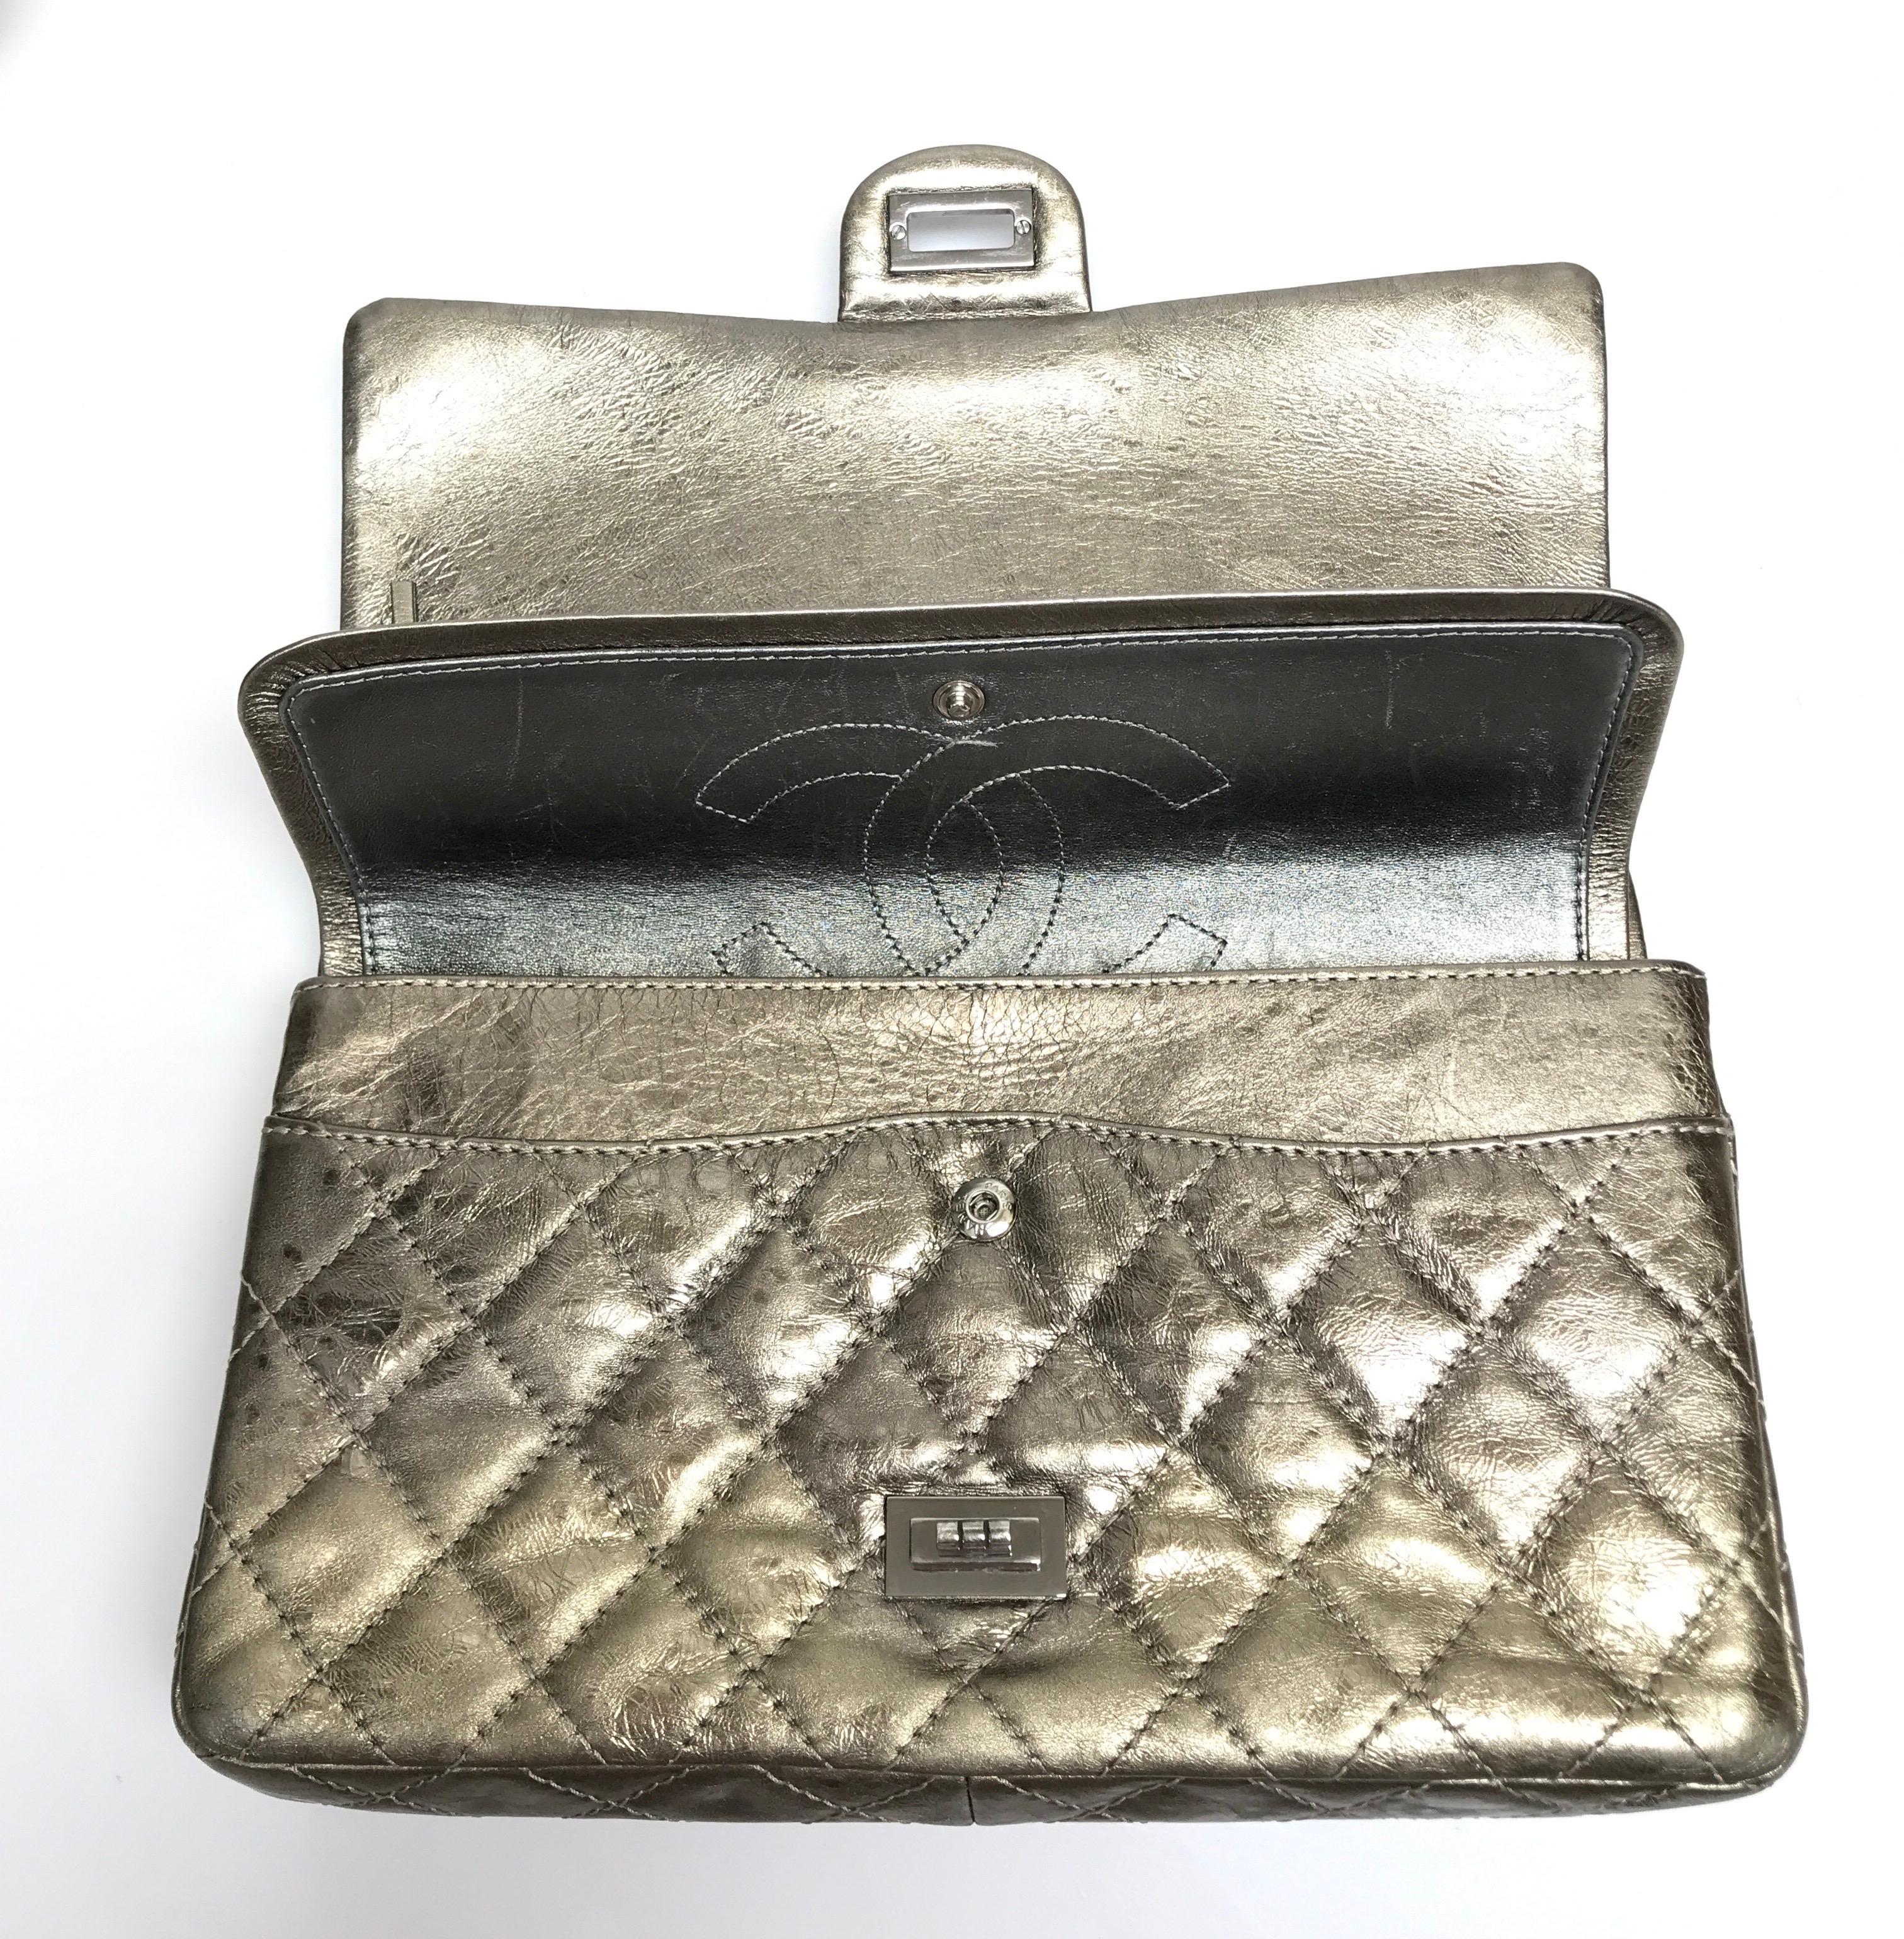 Chanel bronze metallic Re-issue 226 handbag 2